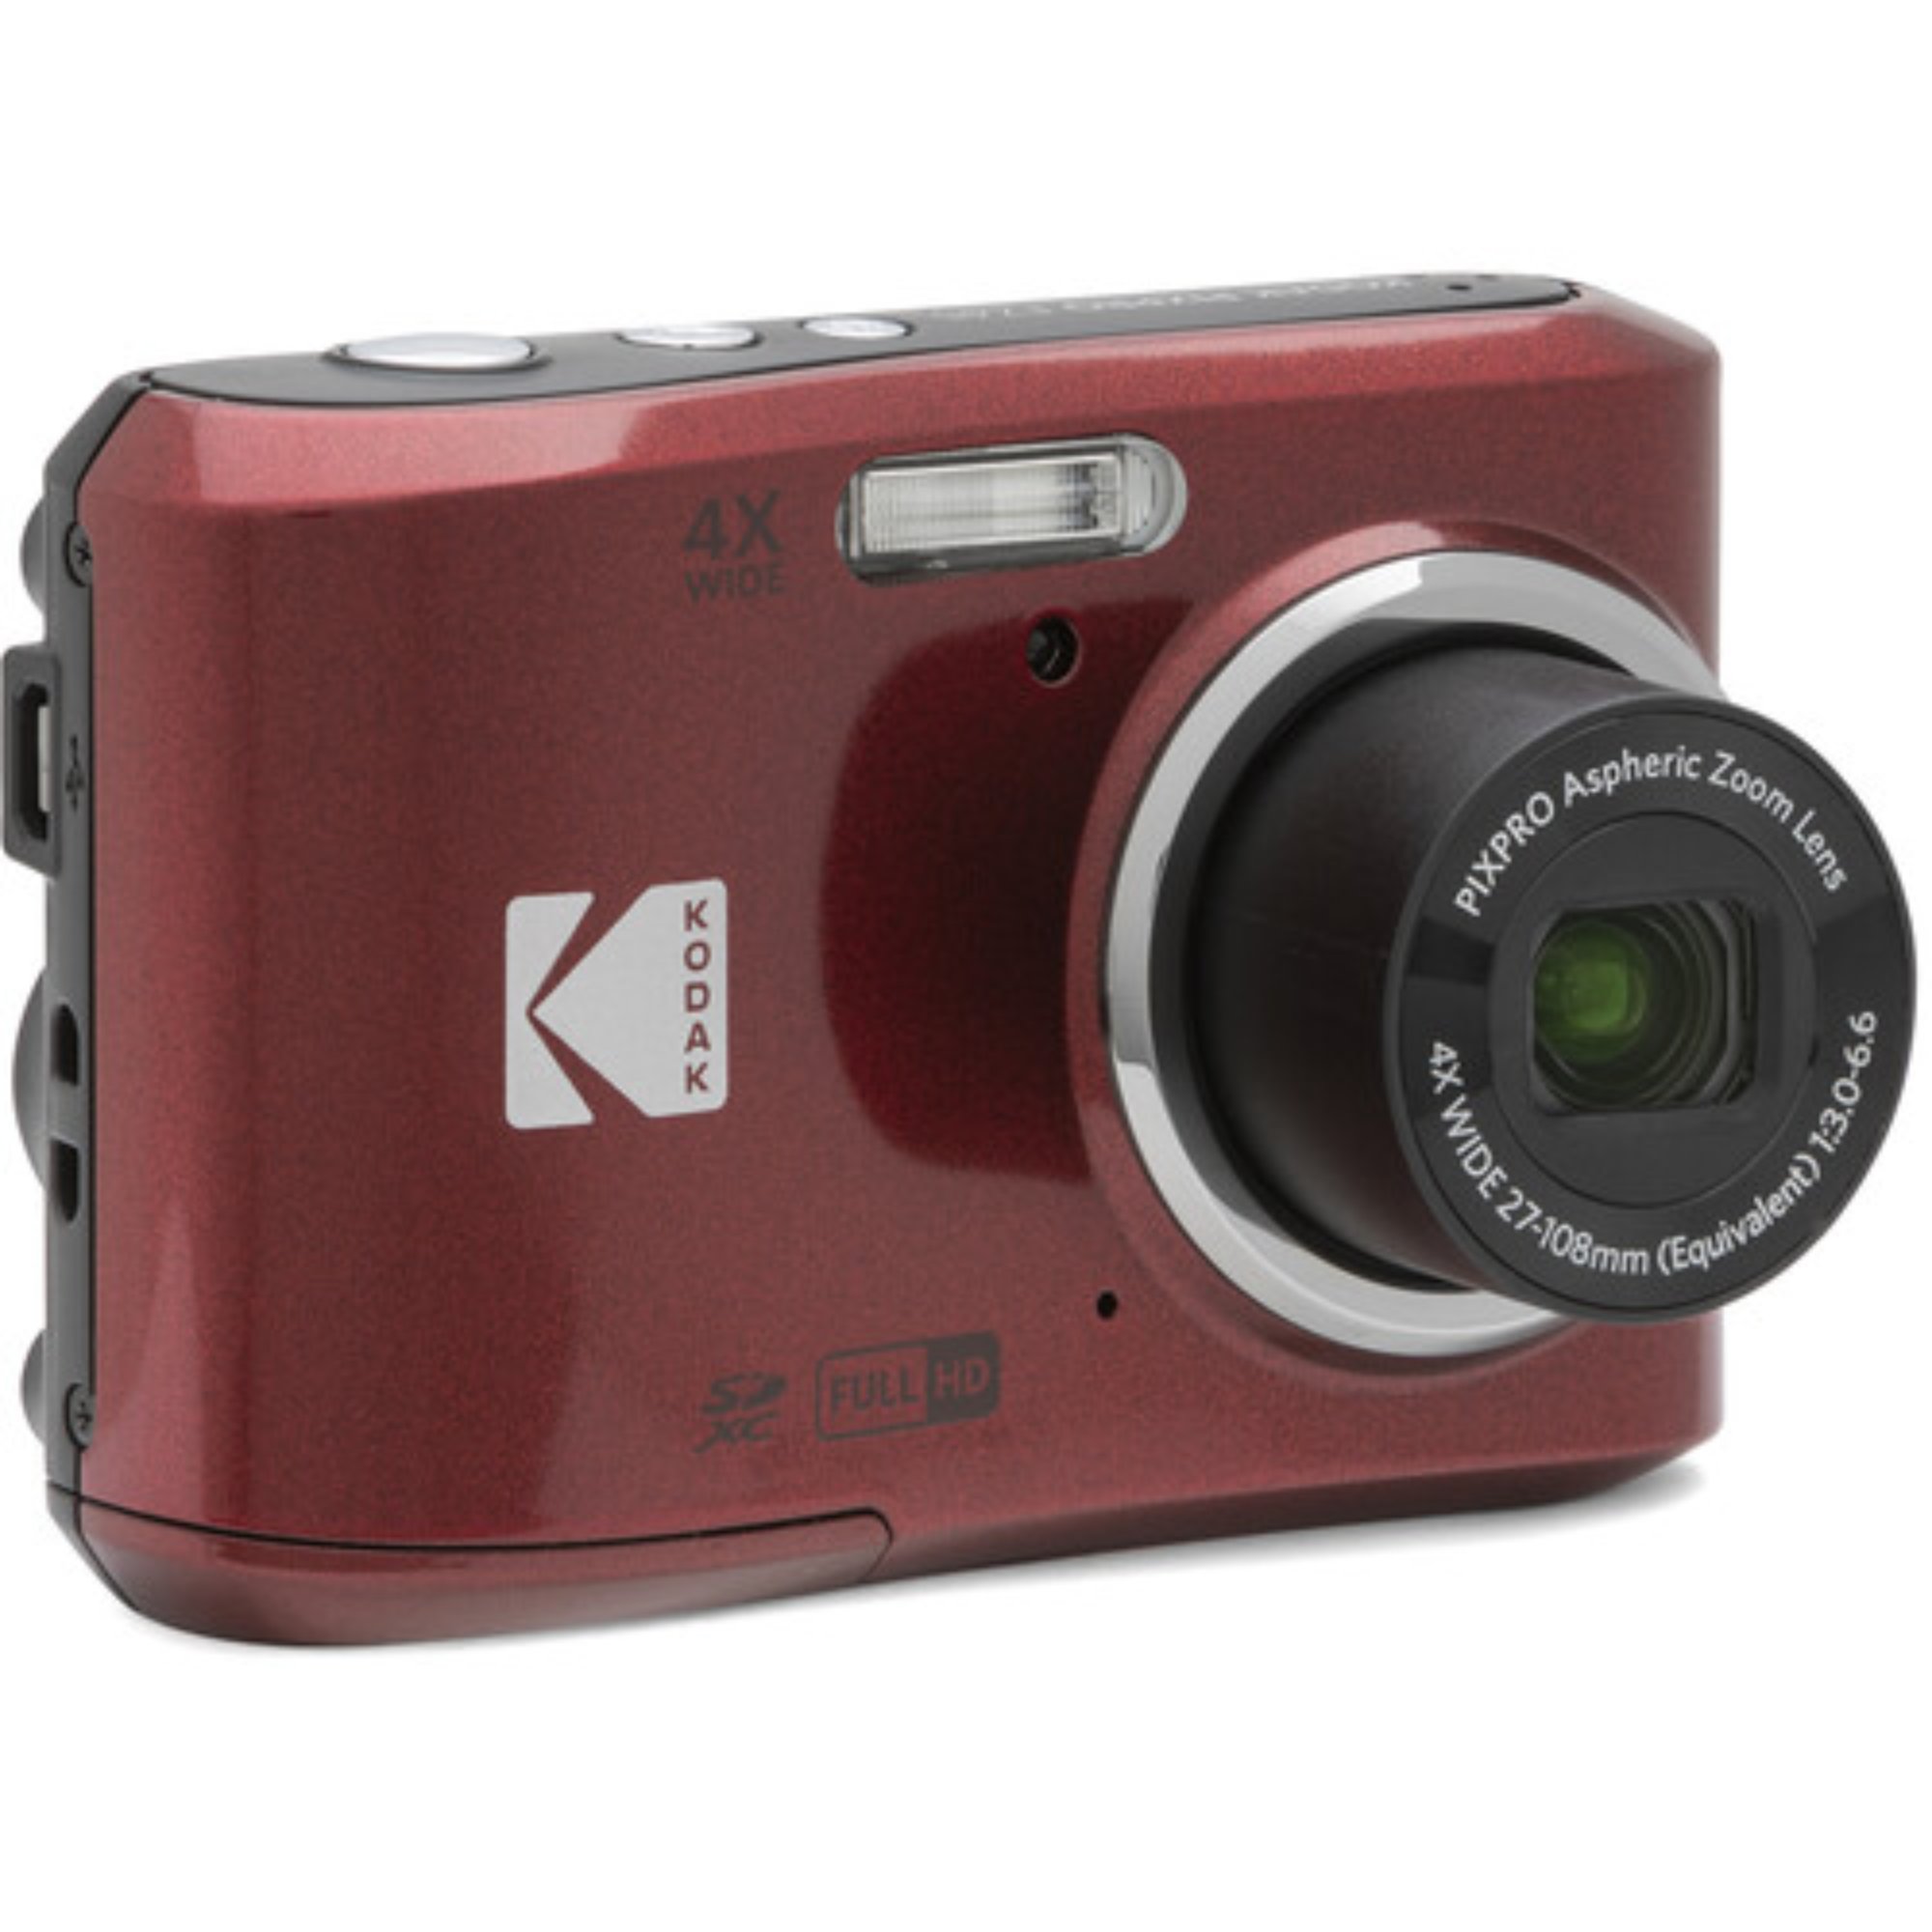 KODAK PIXPRO FZ45 Friendly Zoom digital camera -Red - image 4 of 4